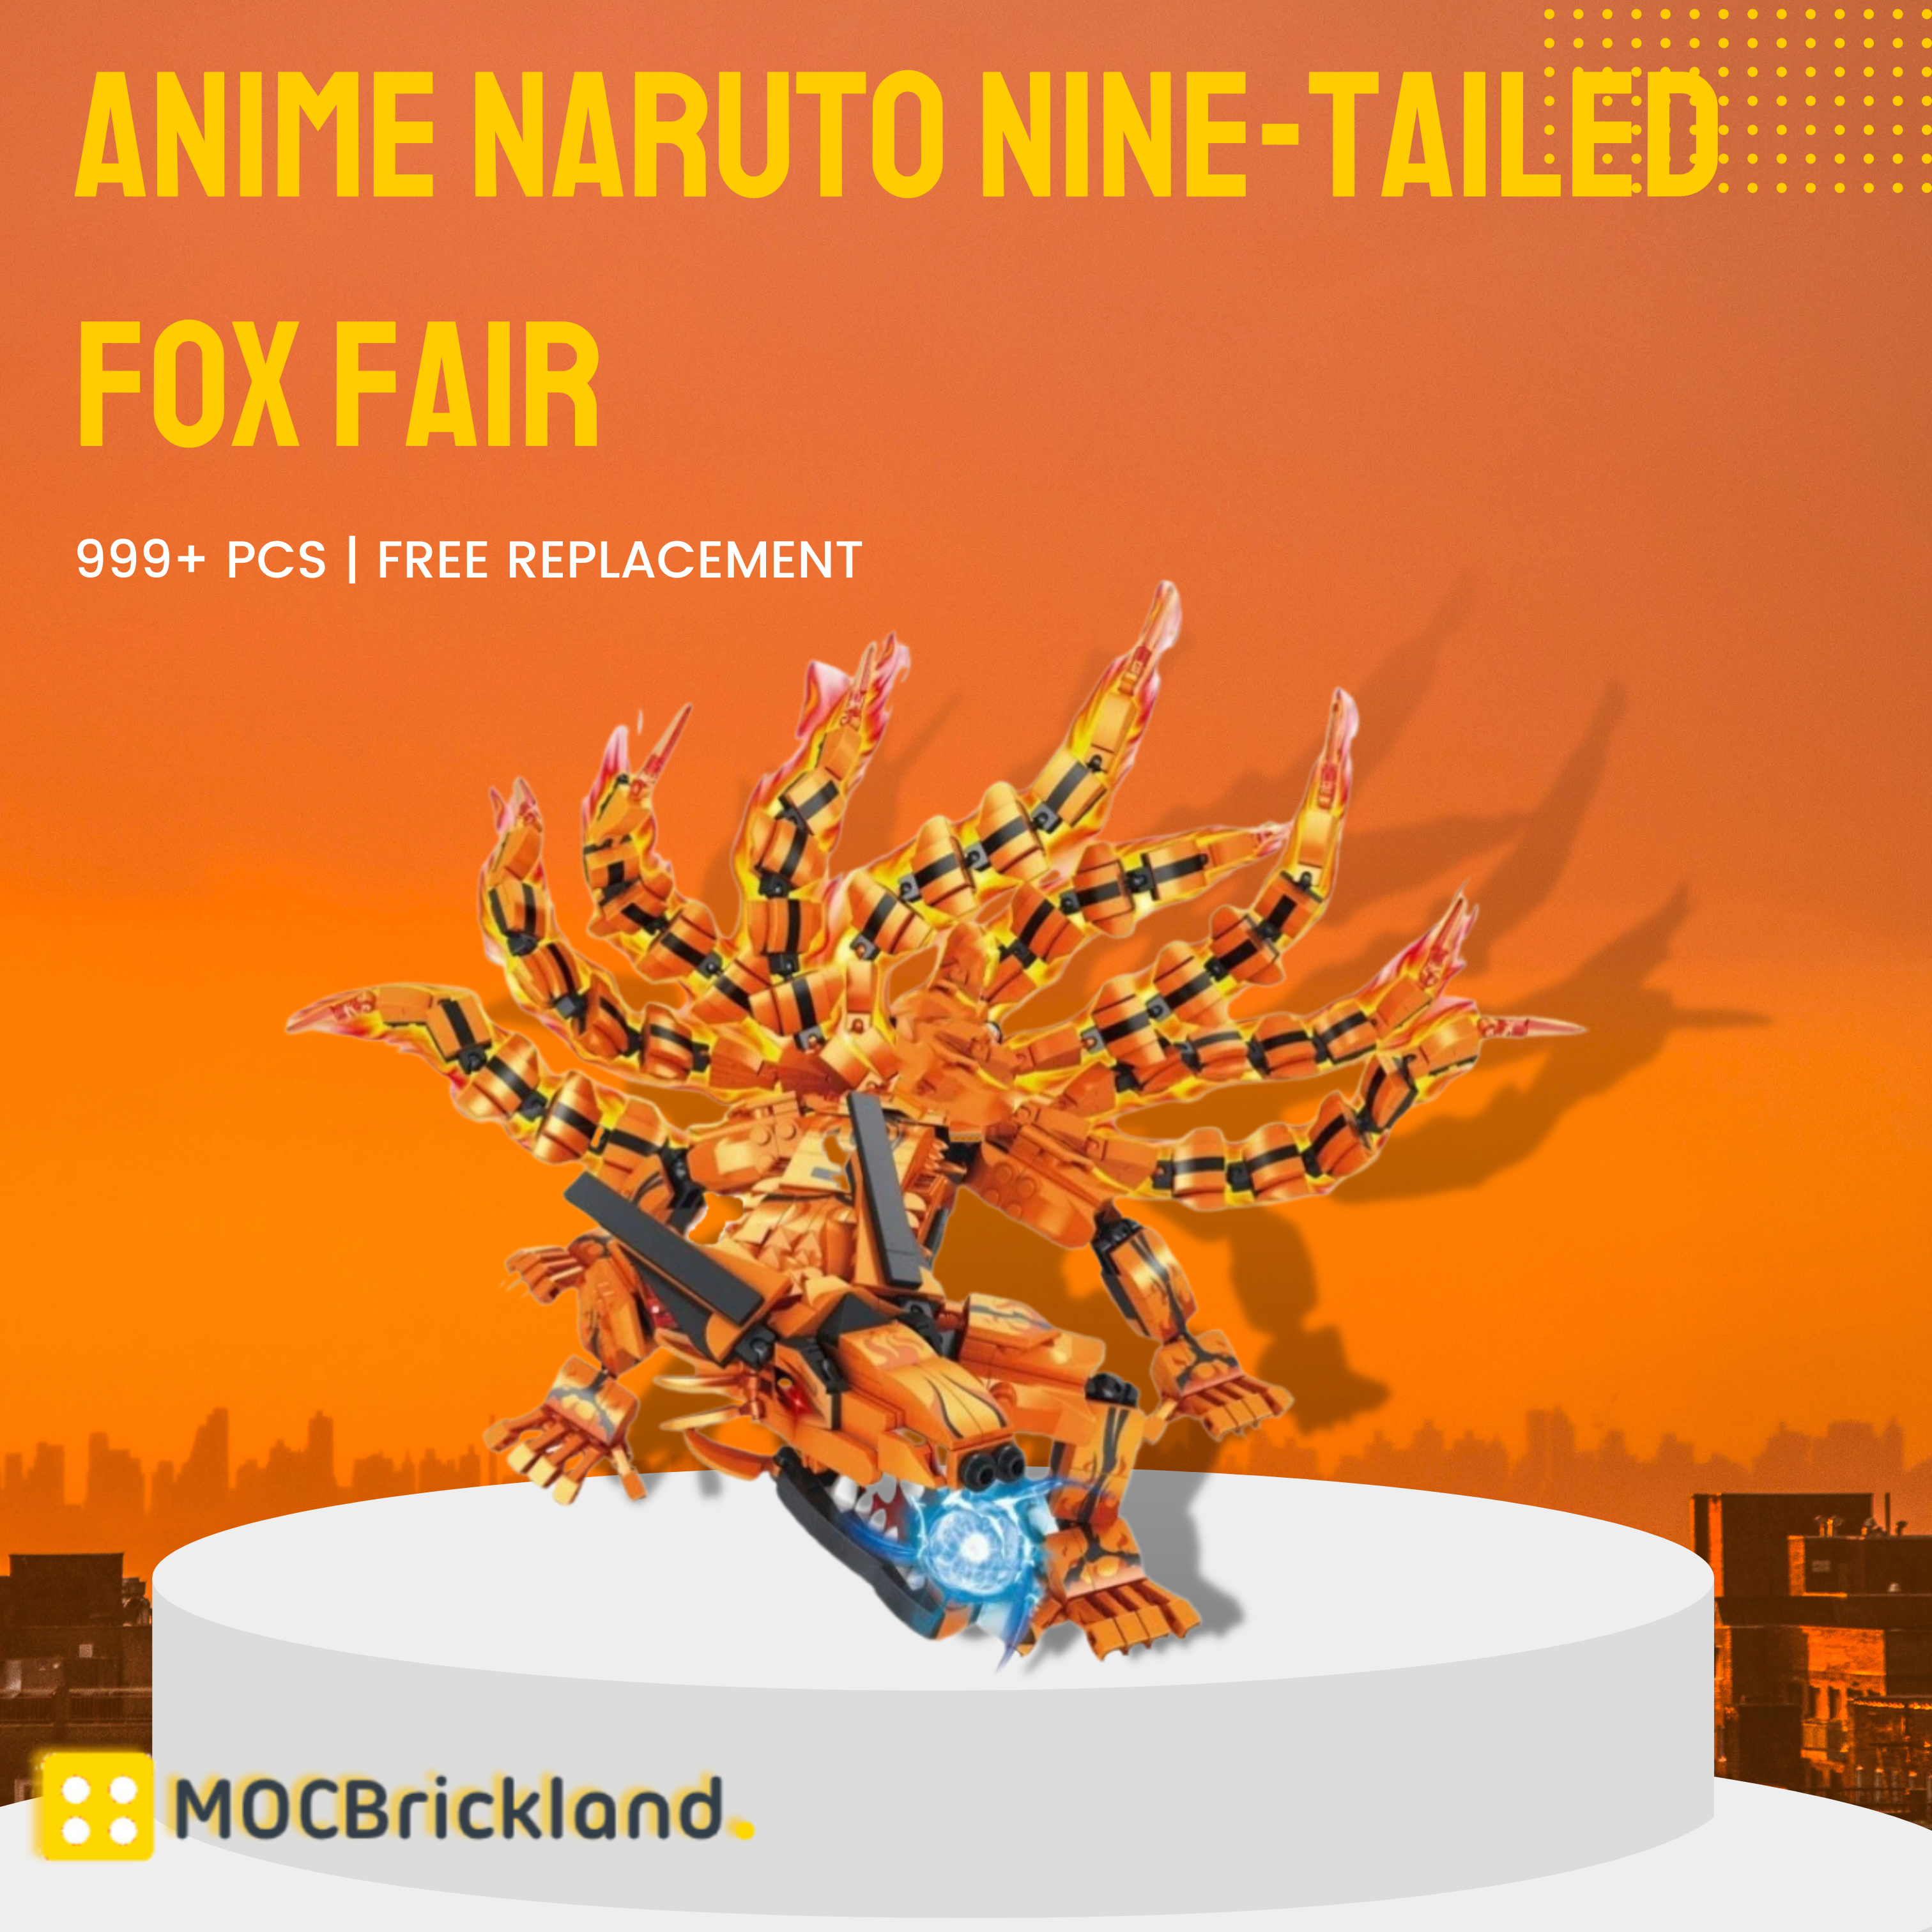 Movie MOC-89550 Anime Naruto Nine-tailed Fox Fair MOCBRICKLAND